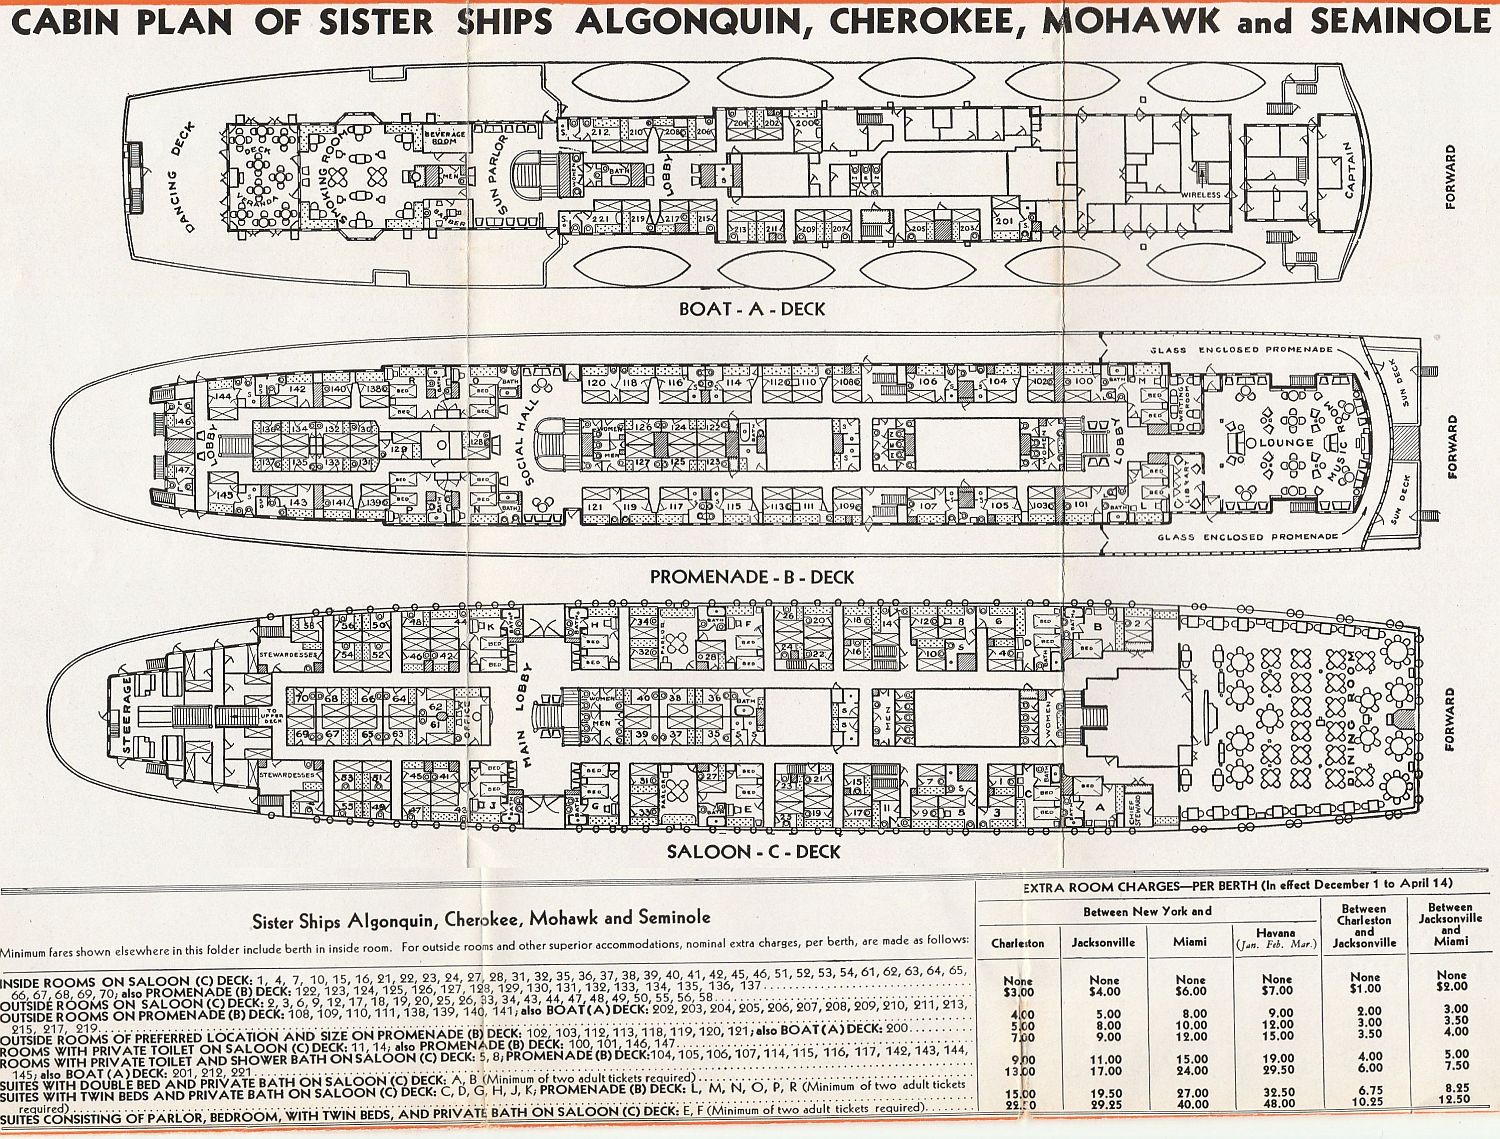 Clyde-Mallory Lines Cabin plans & description: Algonquin, Cherokee, Mohawk and Seminole